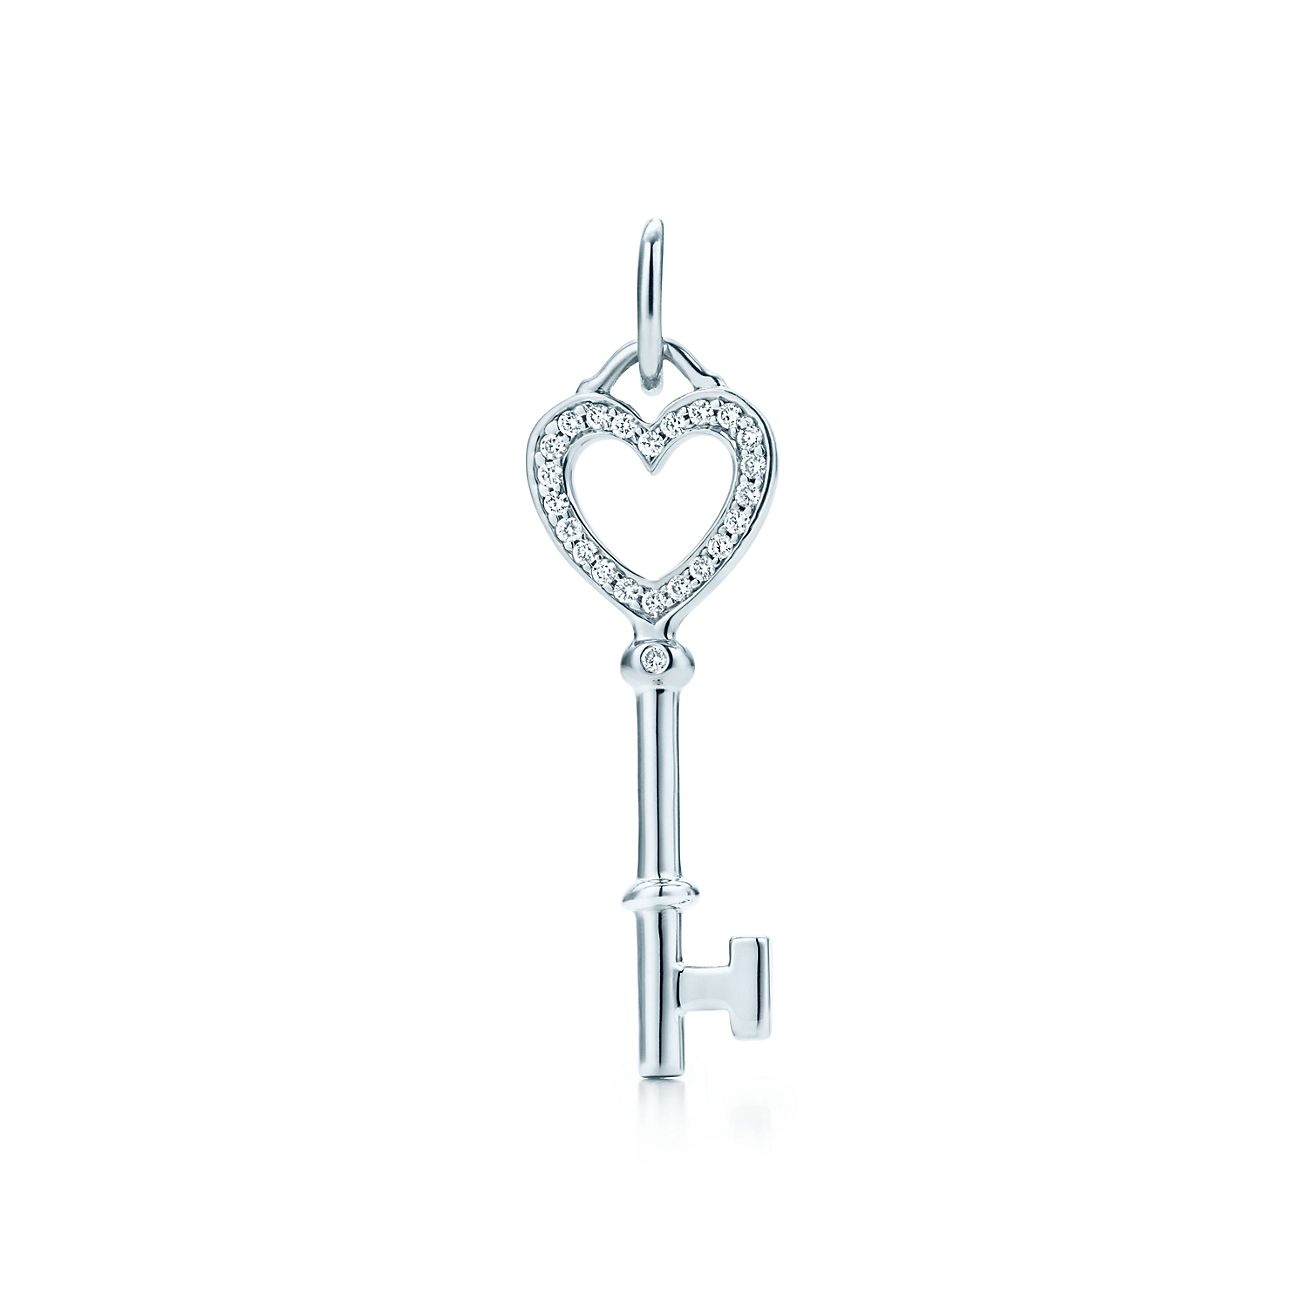 Tiffany Keys Heart Key in White Gold 